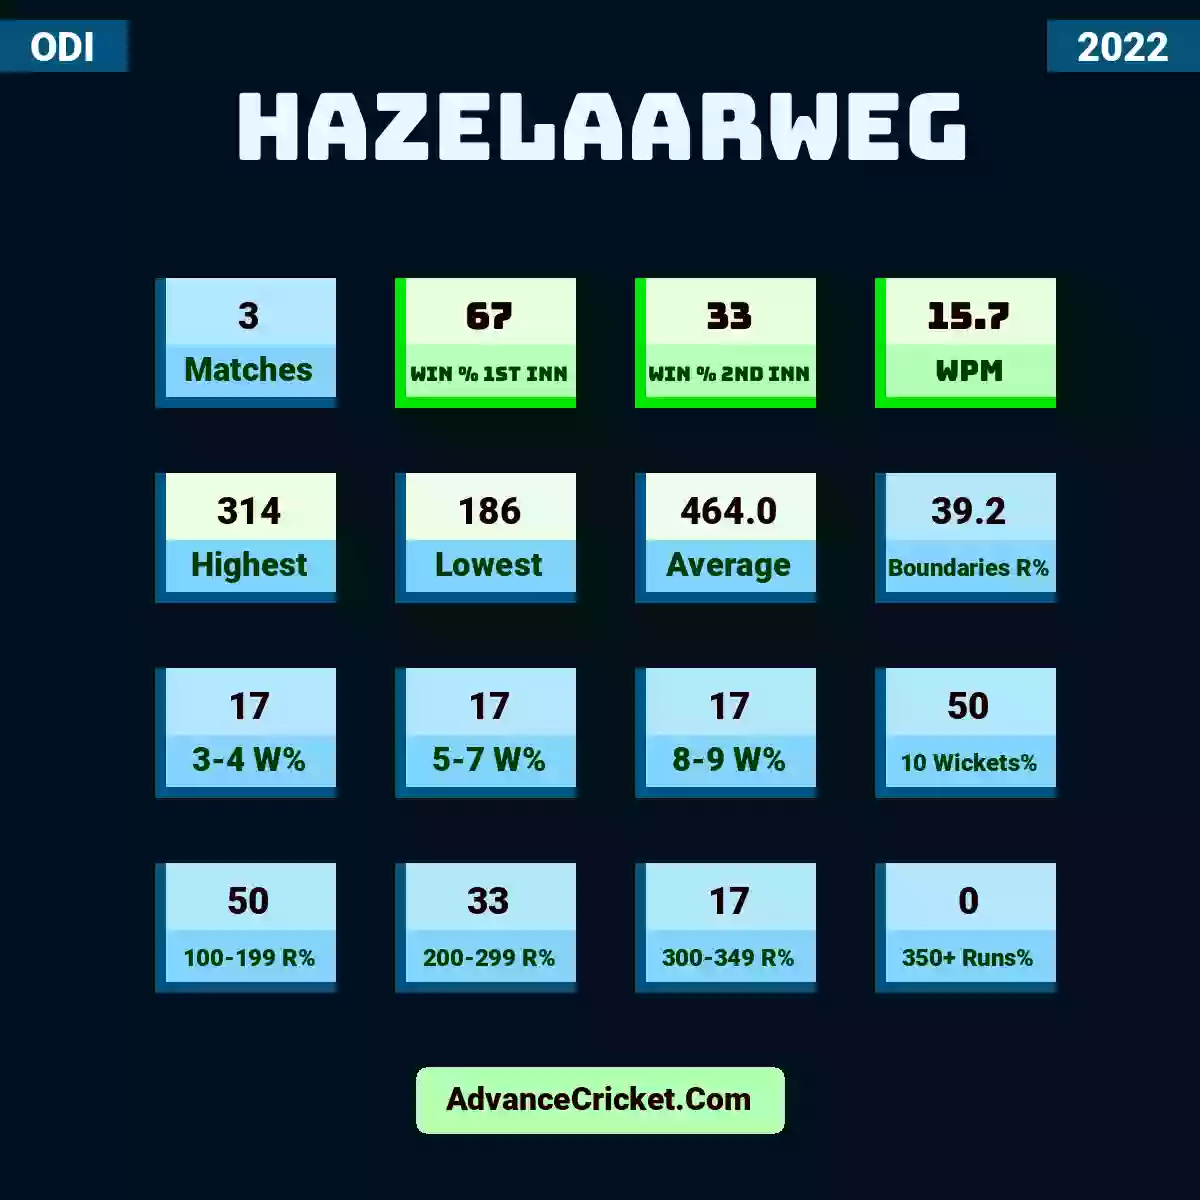 Image showing Hazelaarweg with Matches: 3, Win % 1st Inn: 67, Win % 2nd Inn: 33, WPM: 15.7, Highest: 314, Lowest: 186, Average: 464.0, Boundaries R%: 39.2, 3-4 W%: 17, 5-7 W%: 17, 8-9 W%: 17, 10 Wickets%: 50, 100-199 R%: 50, 200-299 R%: 33, 300-349 R%: 17, 350+ Runs%: 0.